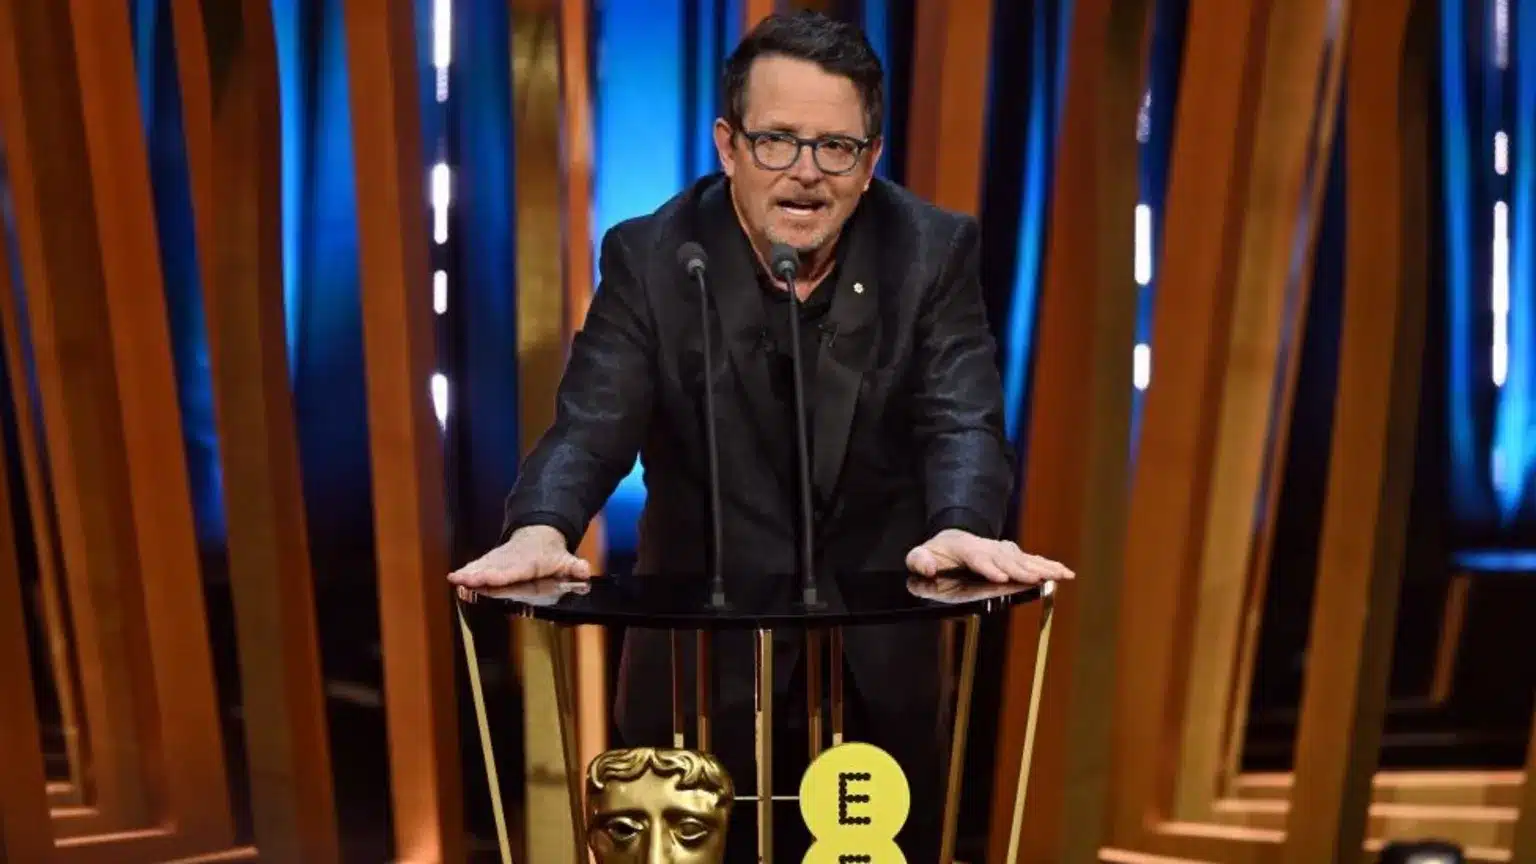 Michael J Fox Brings People to Tears in BAFTA Awards Surprise Appearance